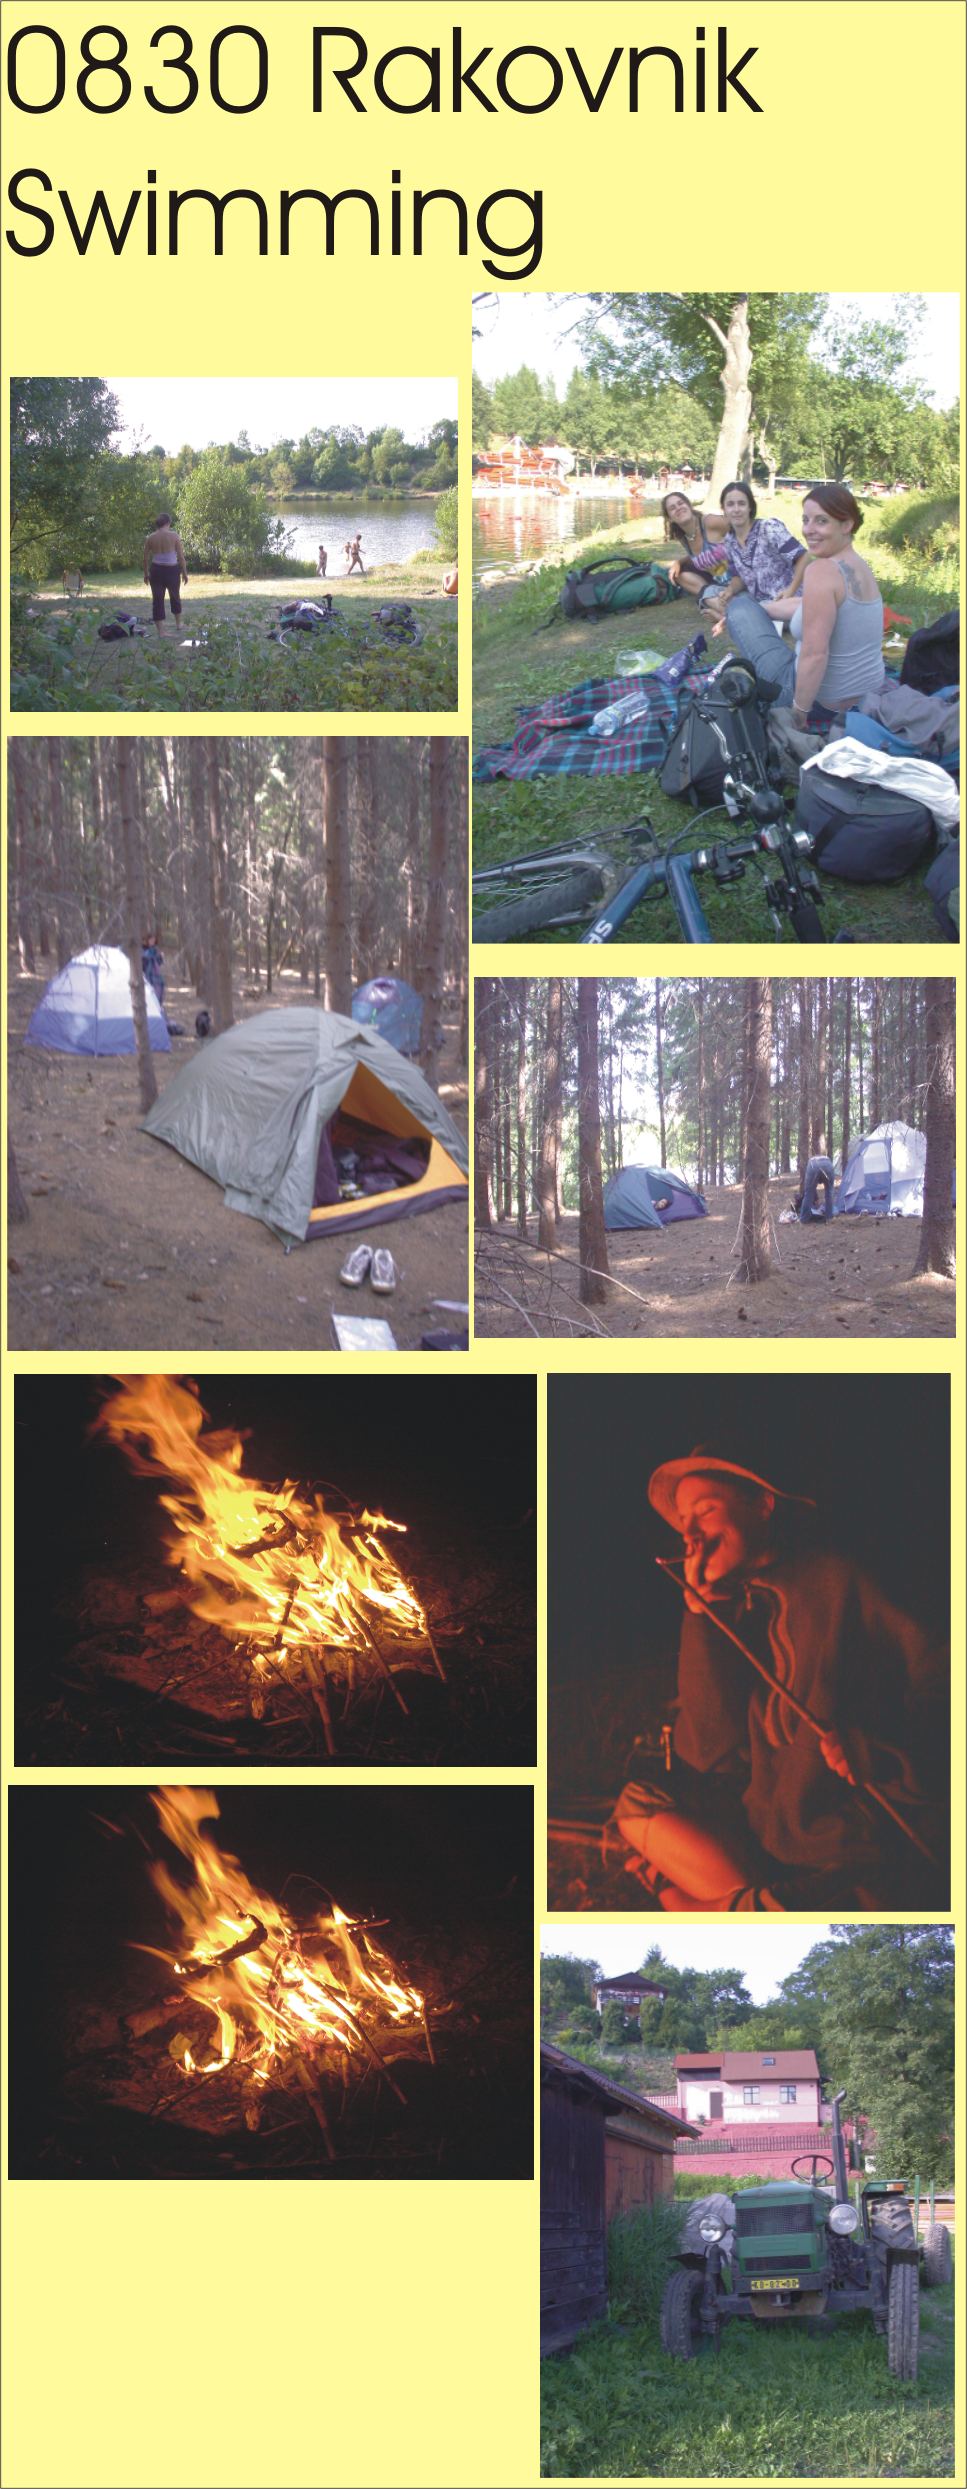 Rakovnik, camping in the Czech Republic